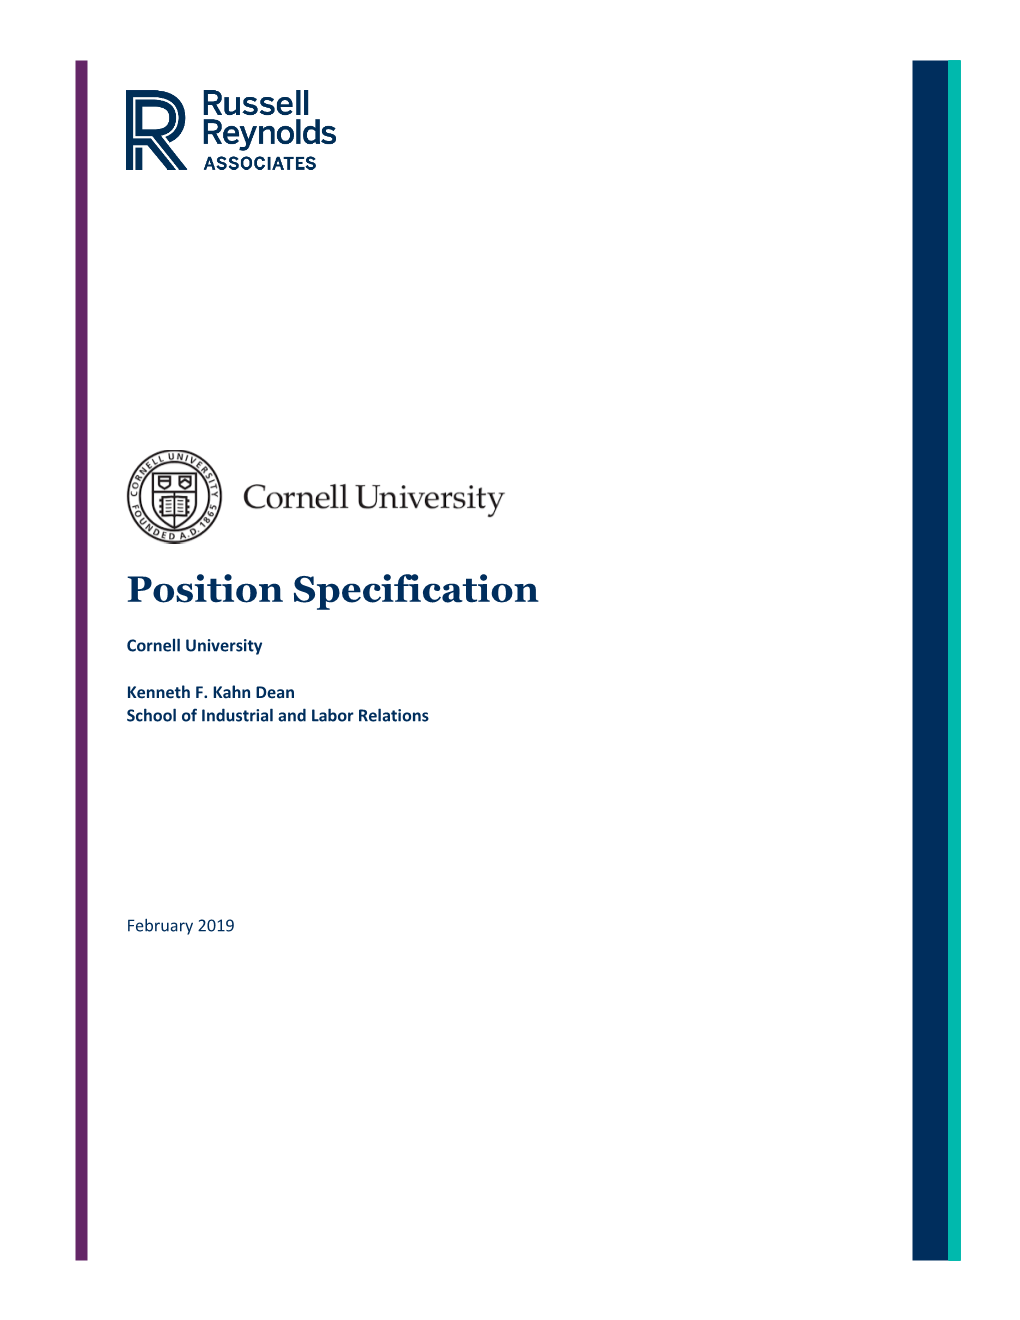 Position Specification: Kenneth F. Kahn Dean, School of Industrial